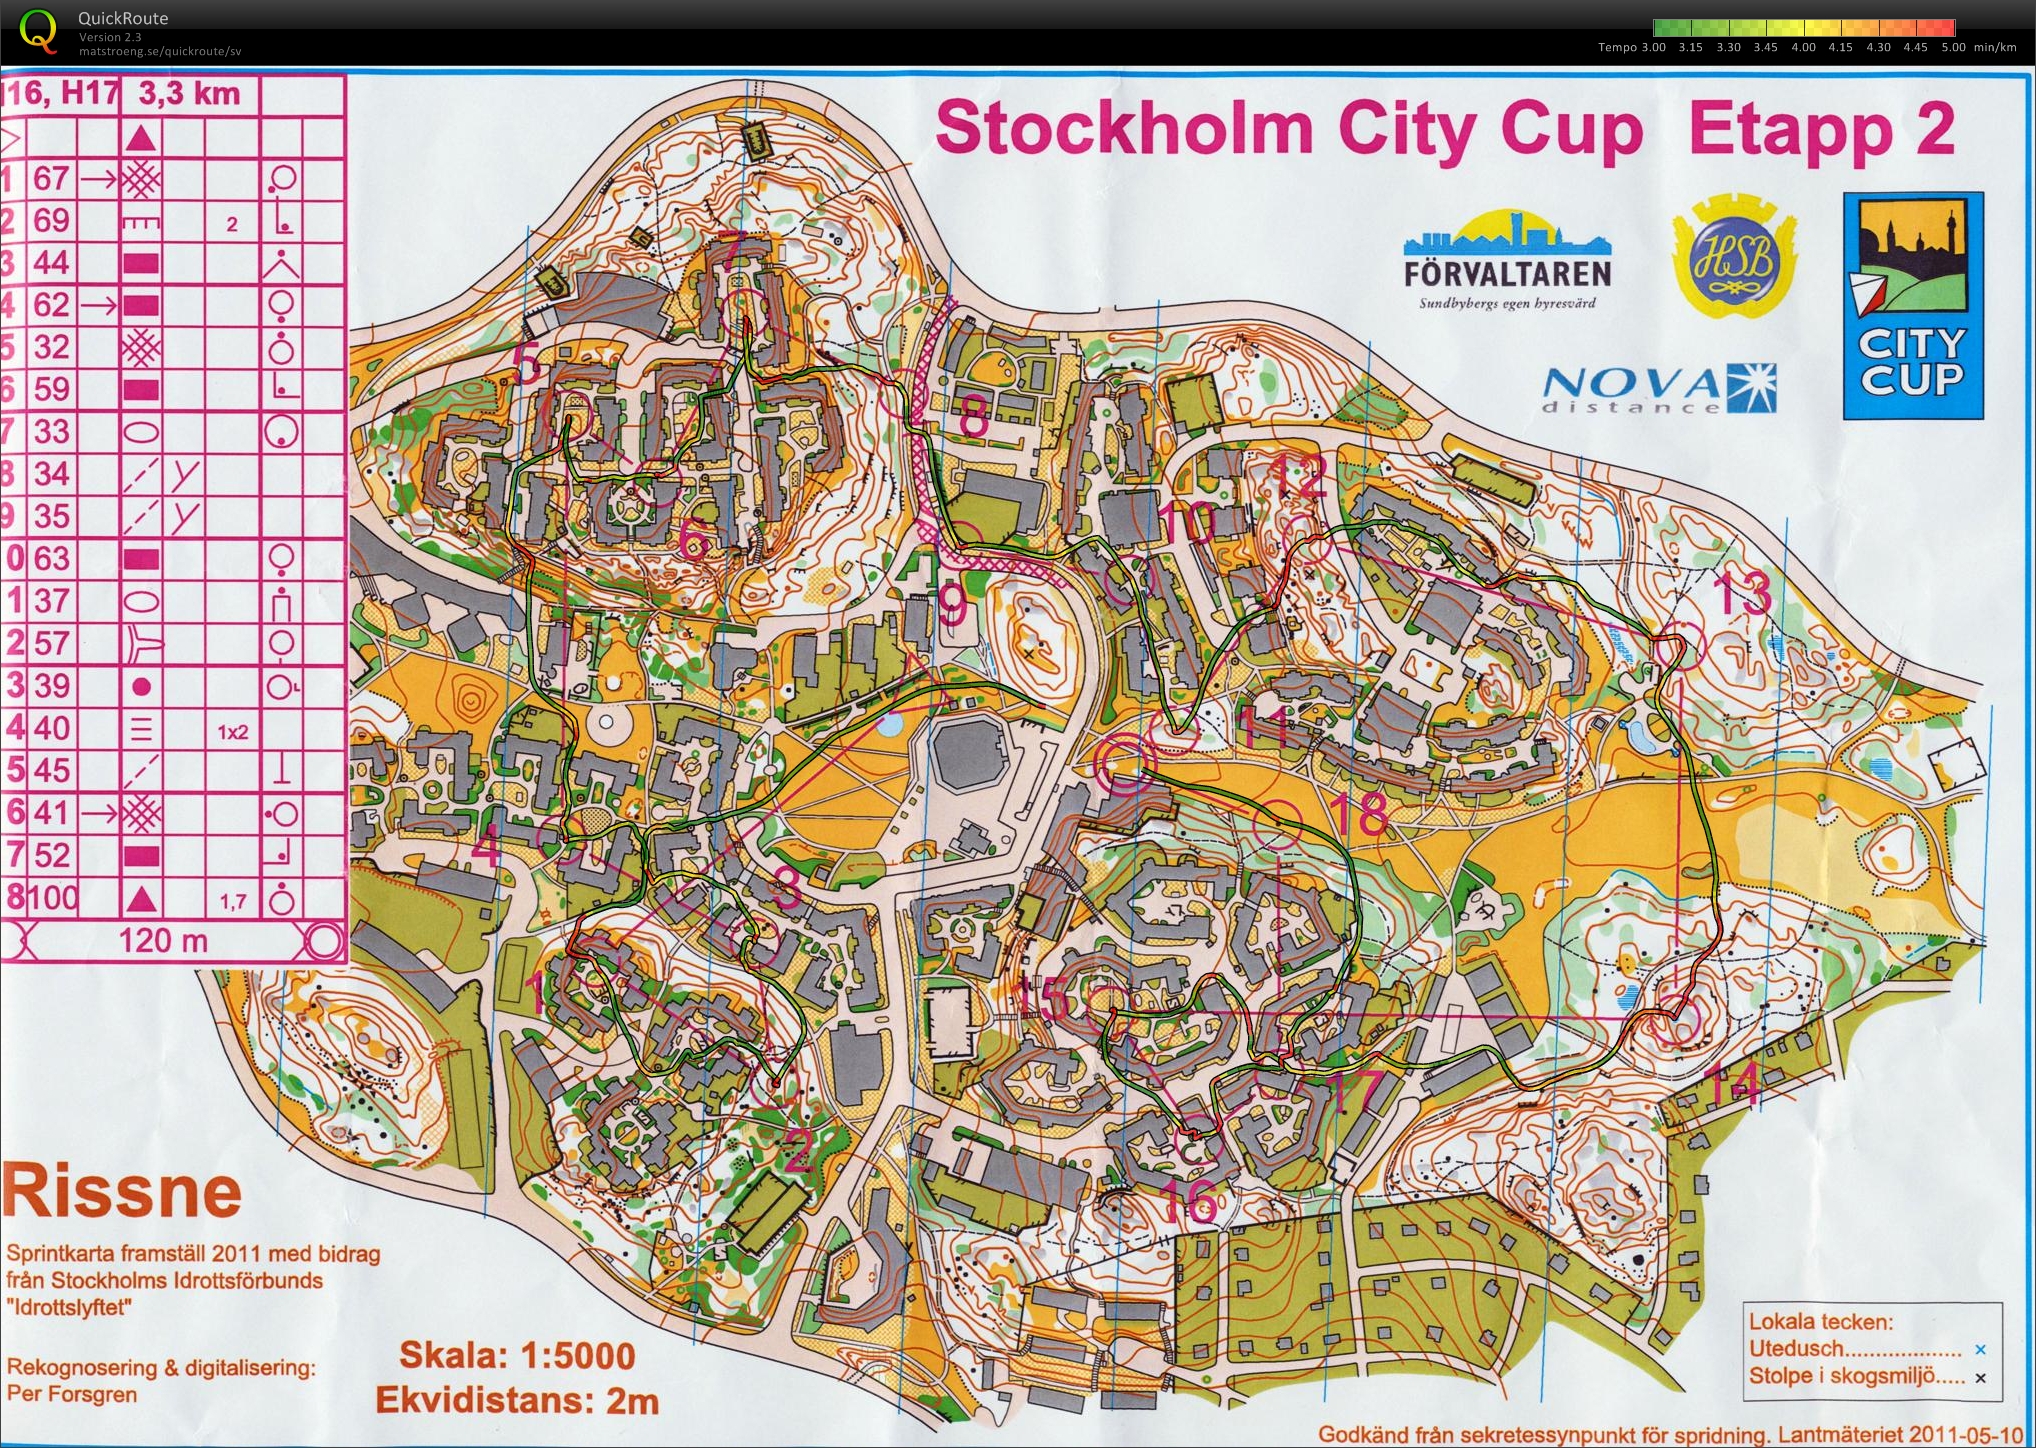 Stockholm City Cup etapp 2 (18/05/2011)